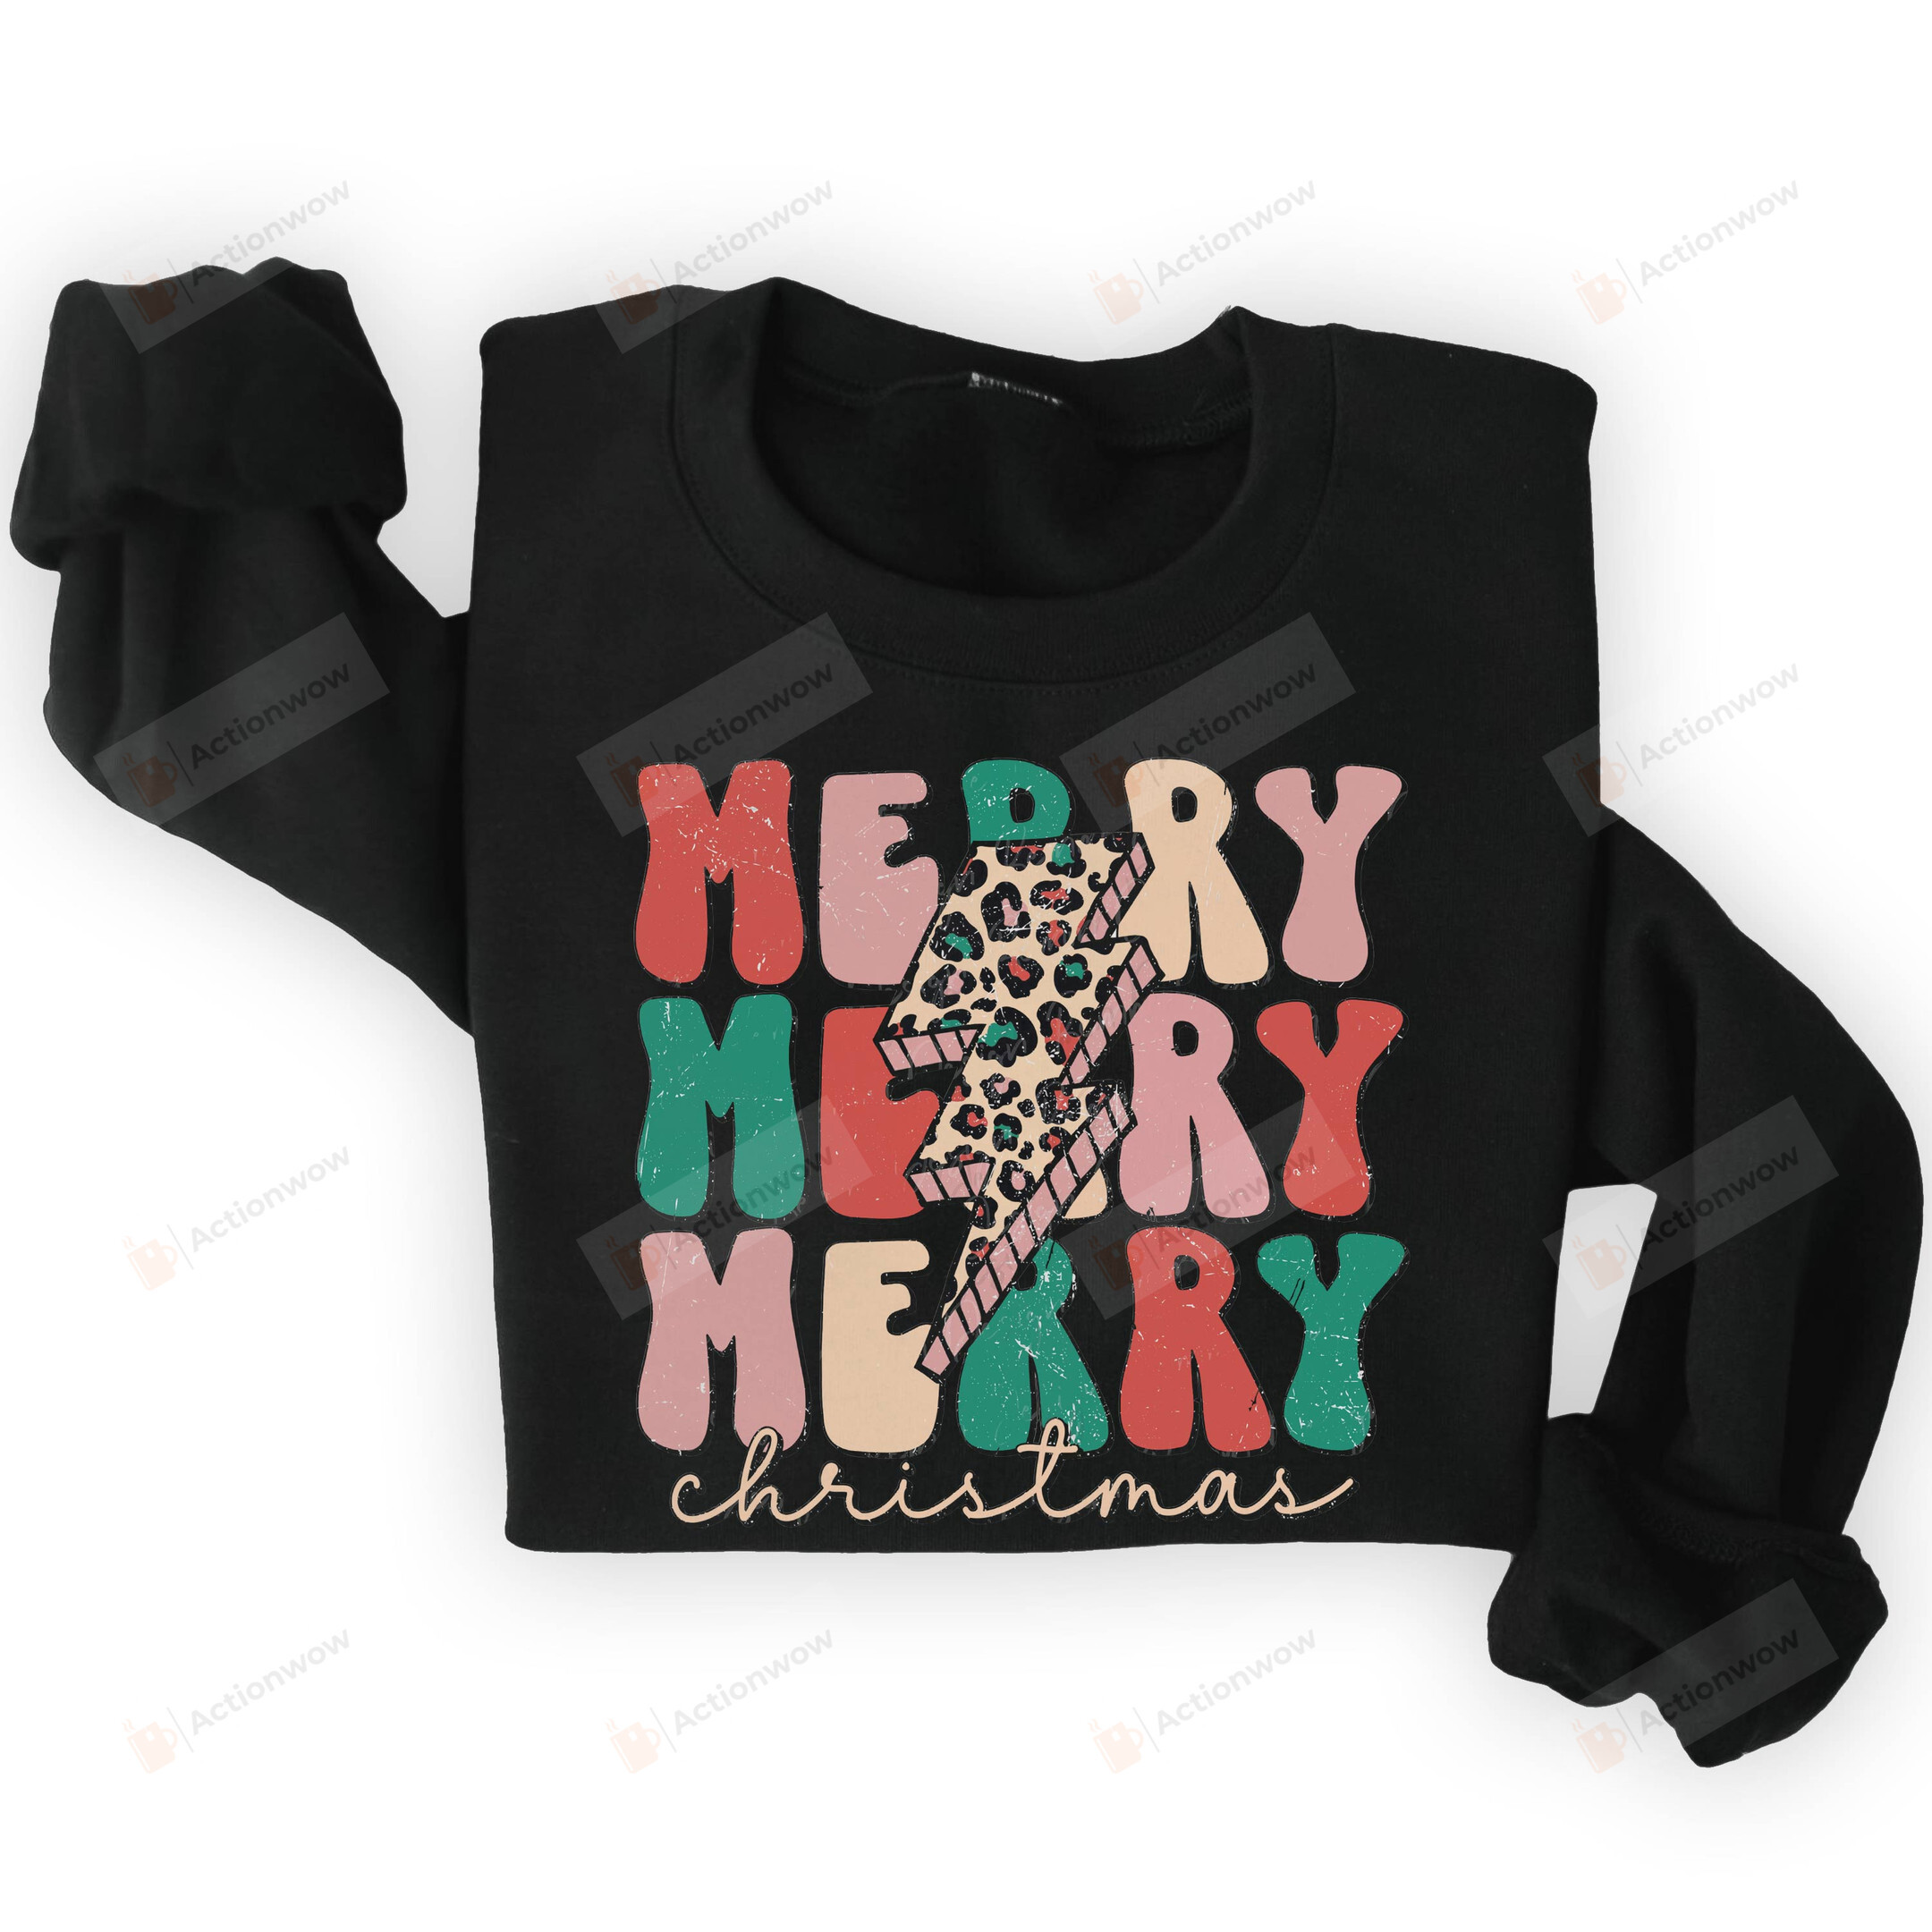 Merry Merry Merry Christmas Leopard Sweatshirt, Christmas Sweater, Christmas Gifts For Women Family